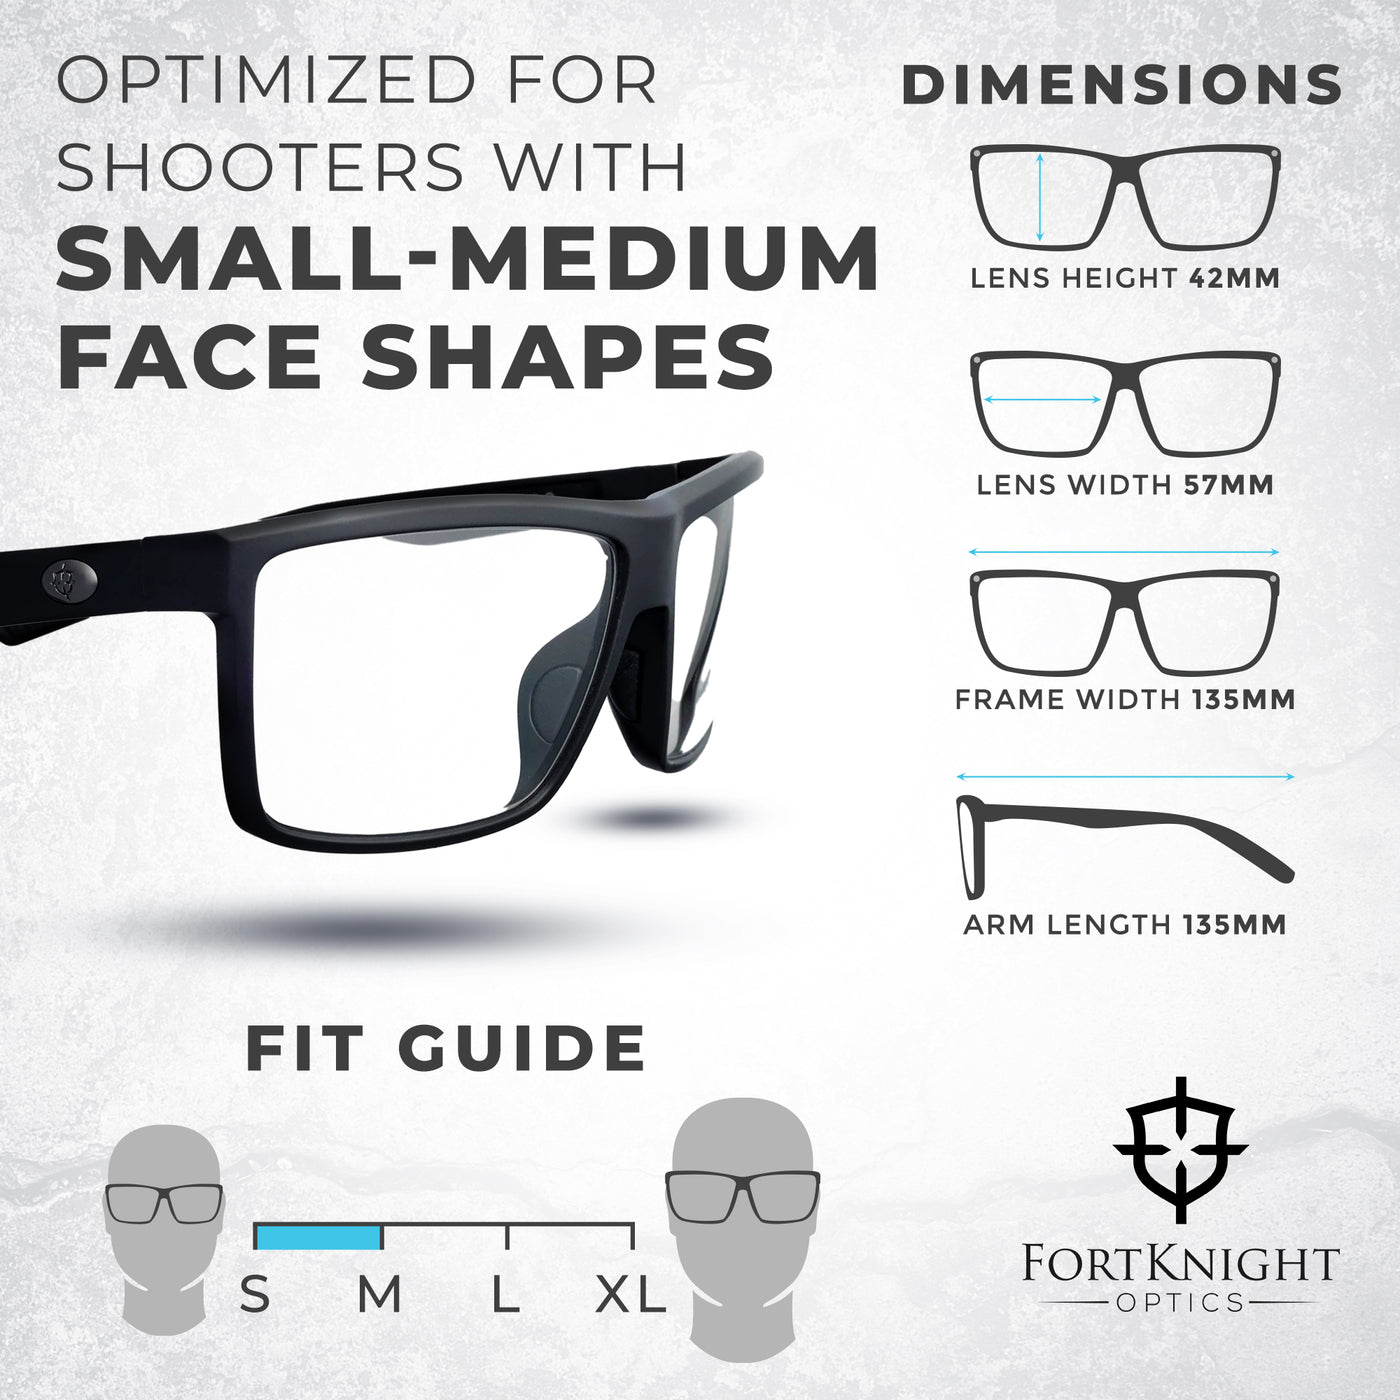 FortKnight Optics 308 Ballistic - World's best premium shooting eyewear featuring lenses by ZEISS - Size small - medium